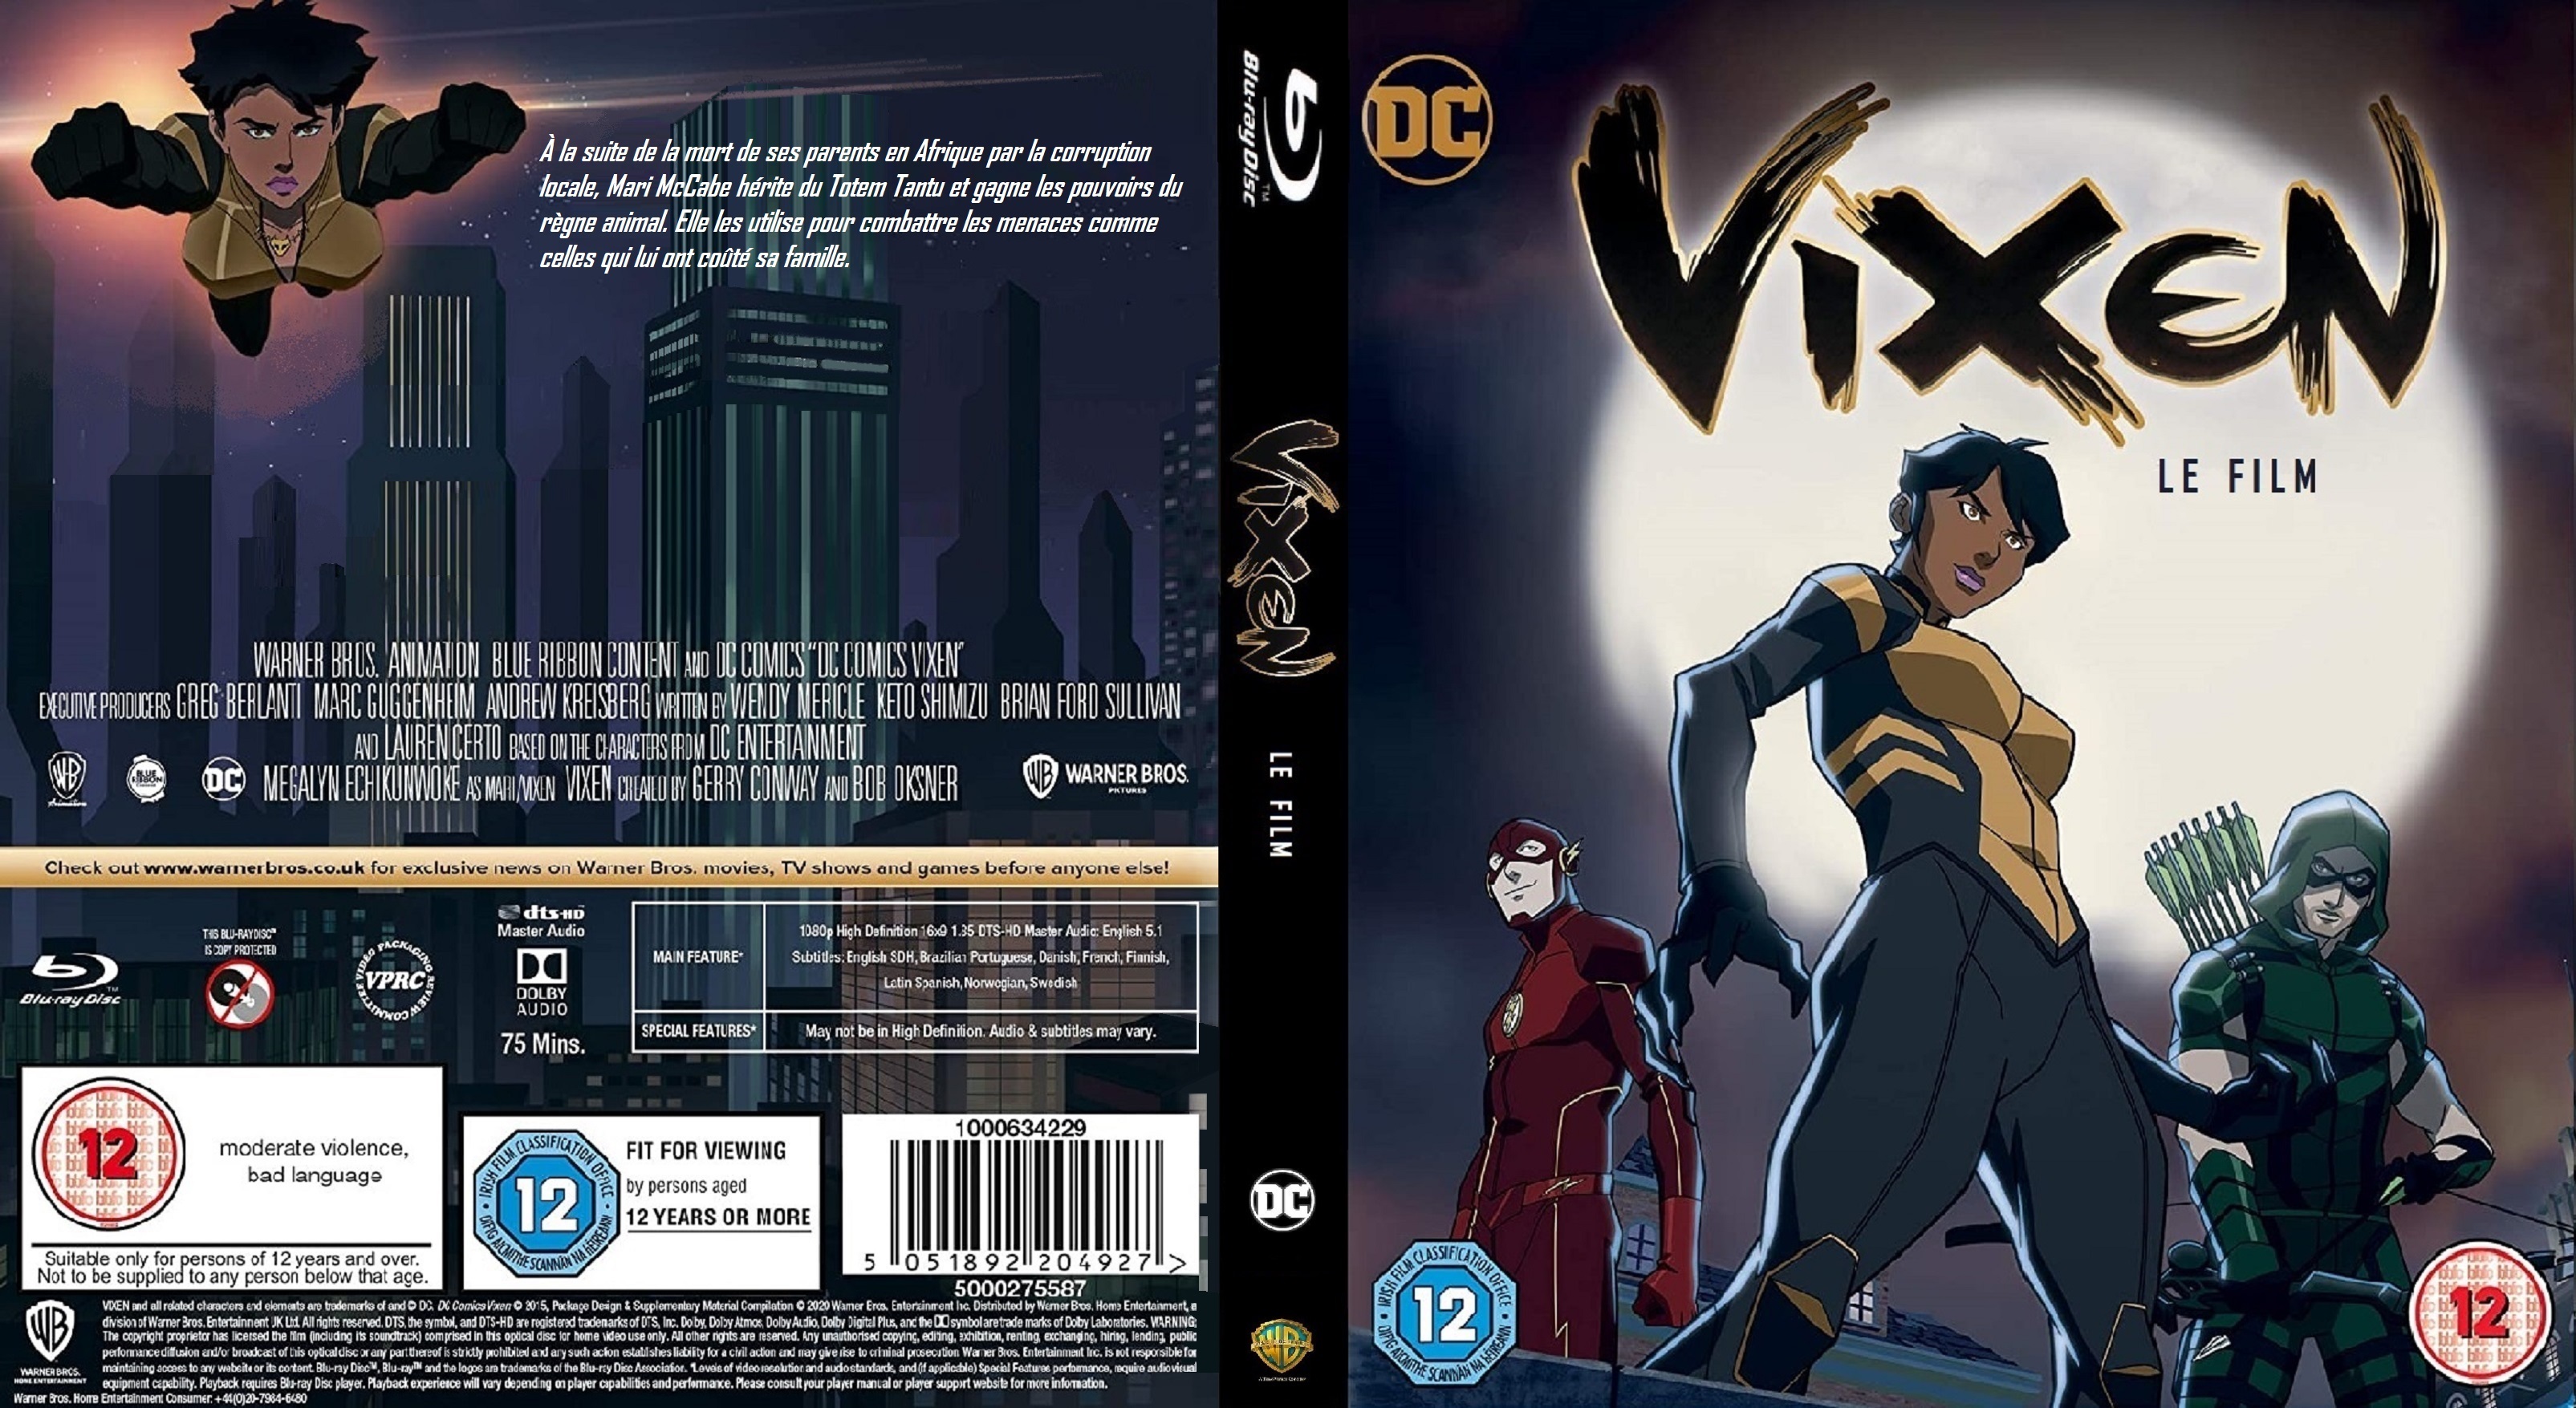 Jaquette DVD Vixen BLU RAY custom v2